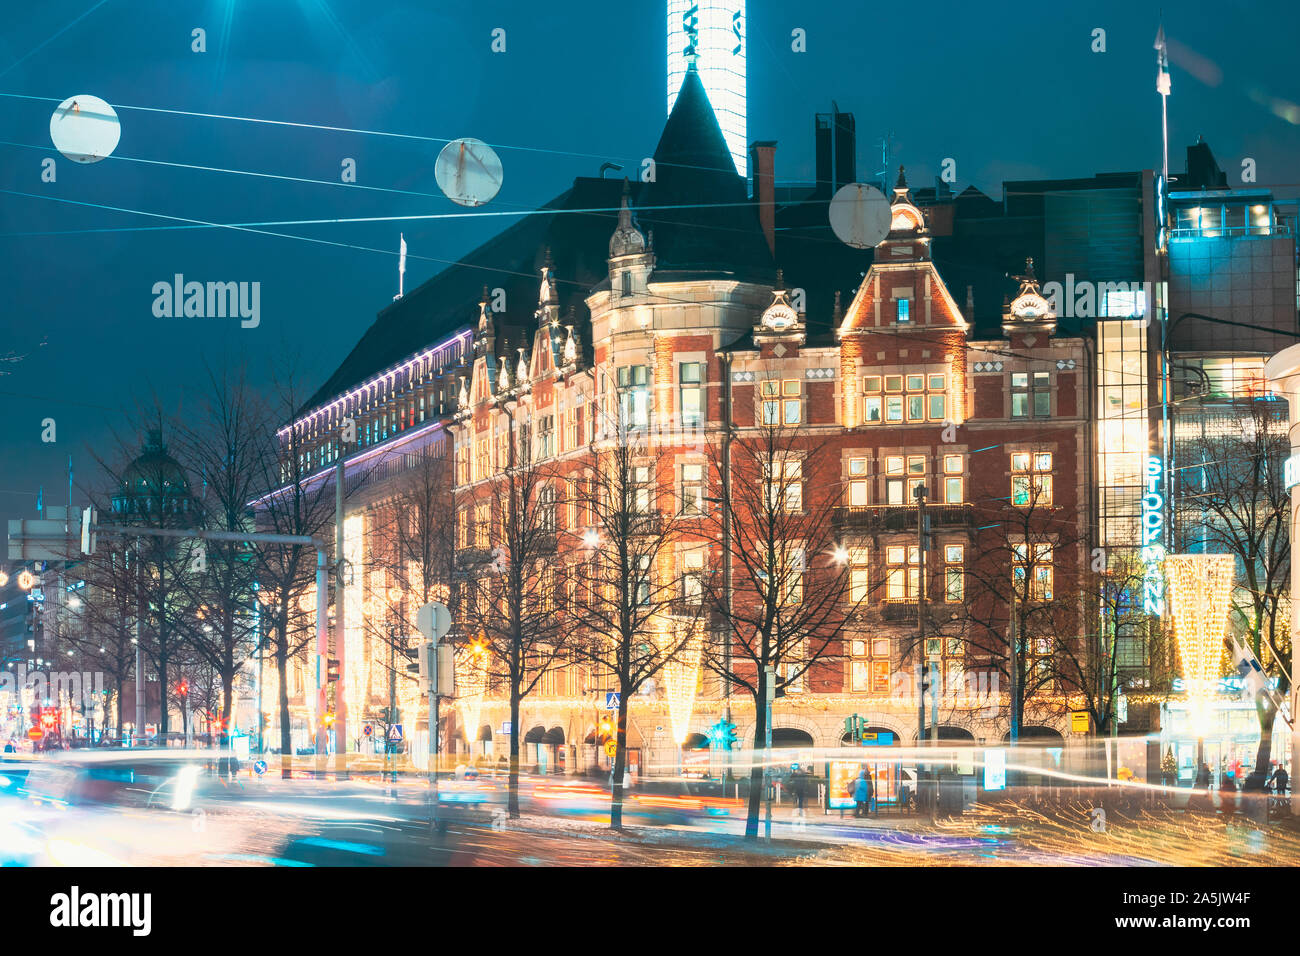 Helsinki, Finland - December 8, 2016: Building On The Corner Of Pohjoisesplanadi Street And Mannerheimintie Or Mannerheim Avenue In Evening Night Illu Stock Photo